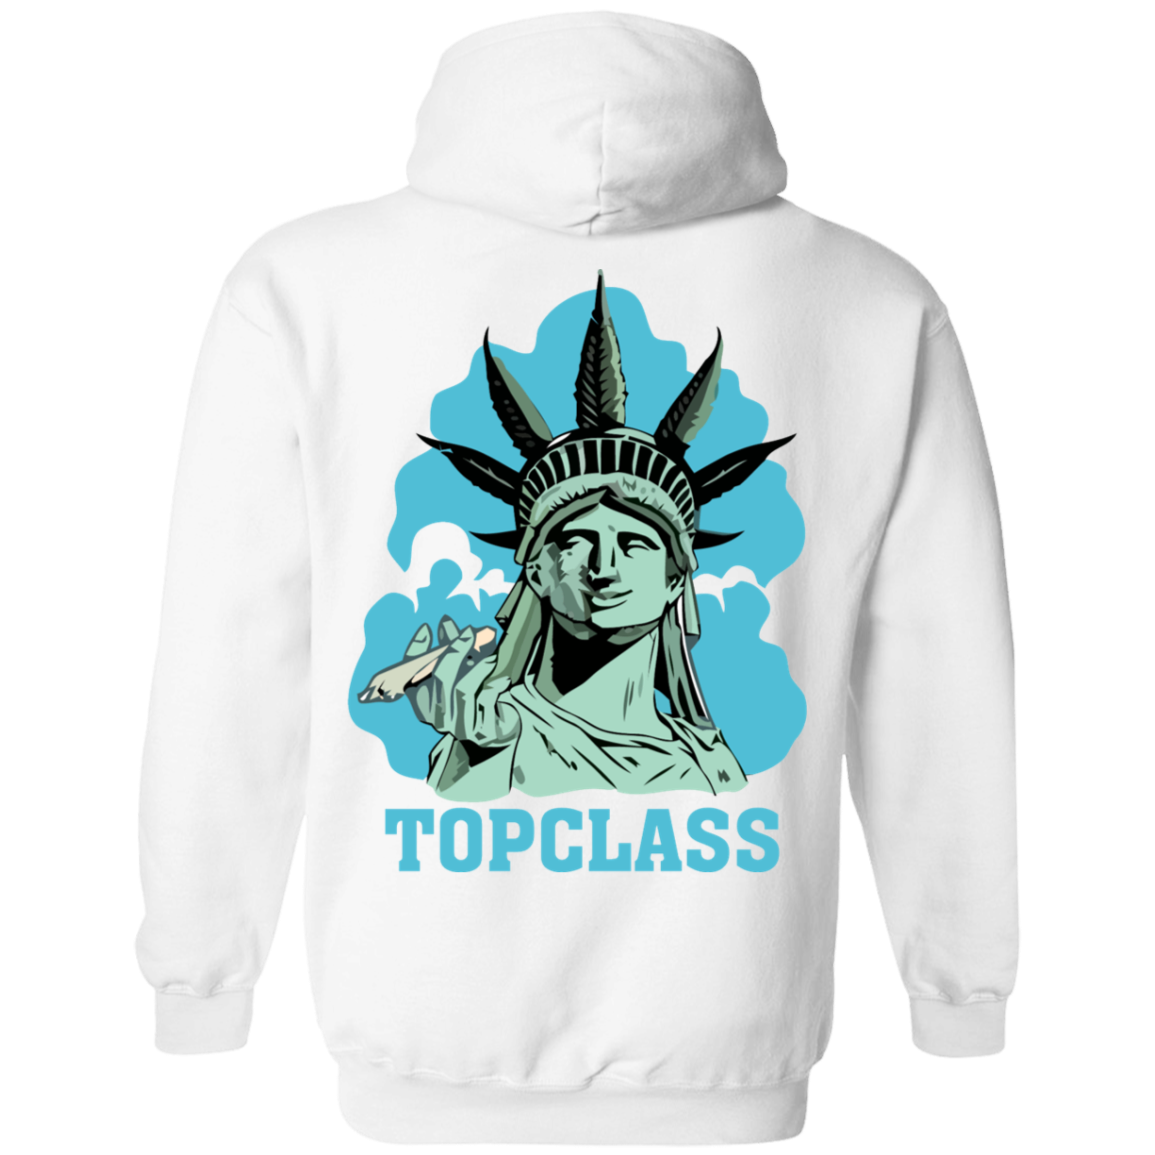 Topclass Statue of Liberty hoodie